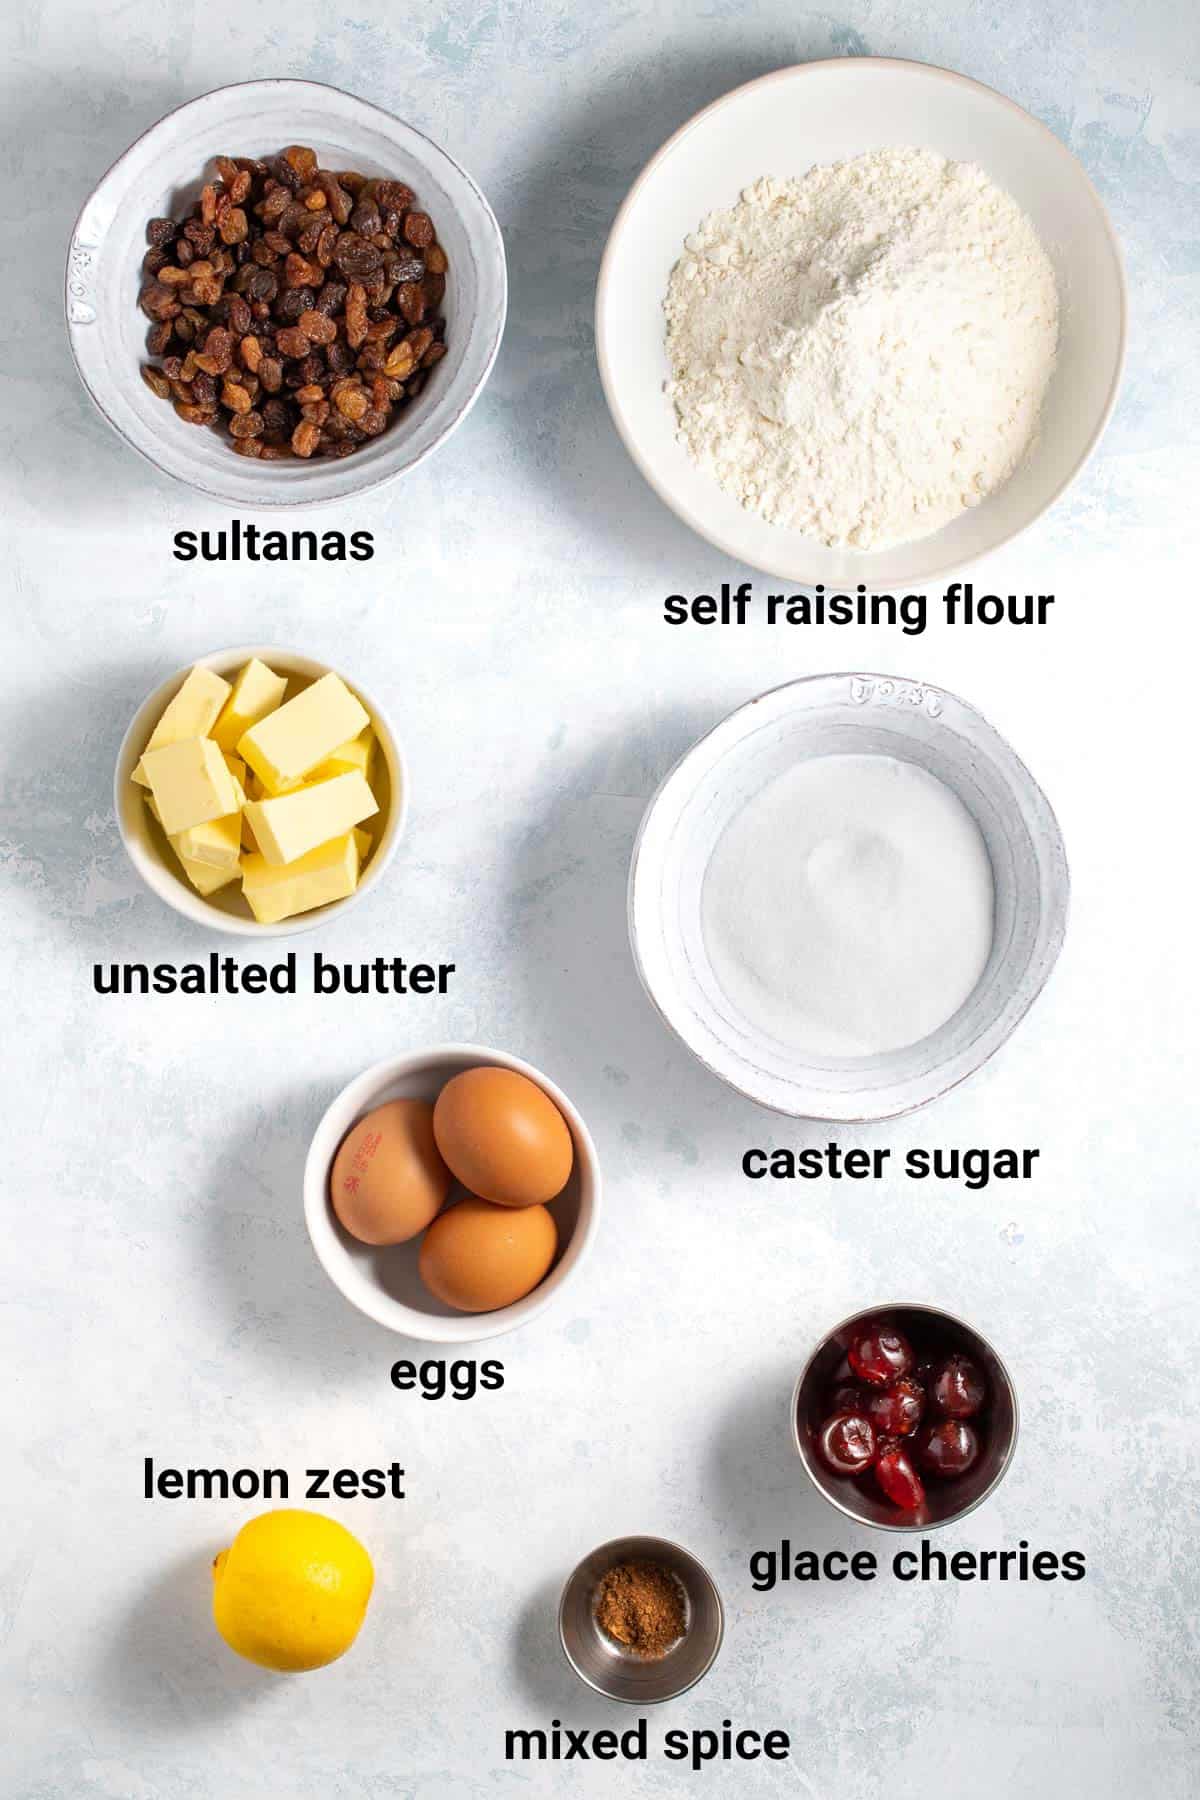 Sultana cake ingredients.